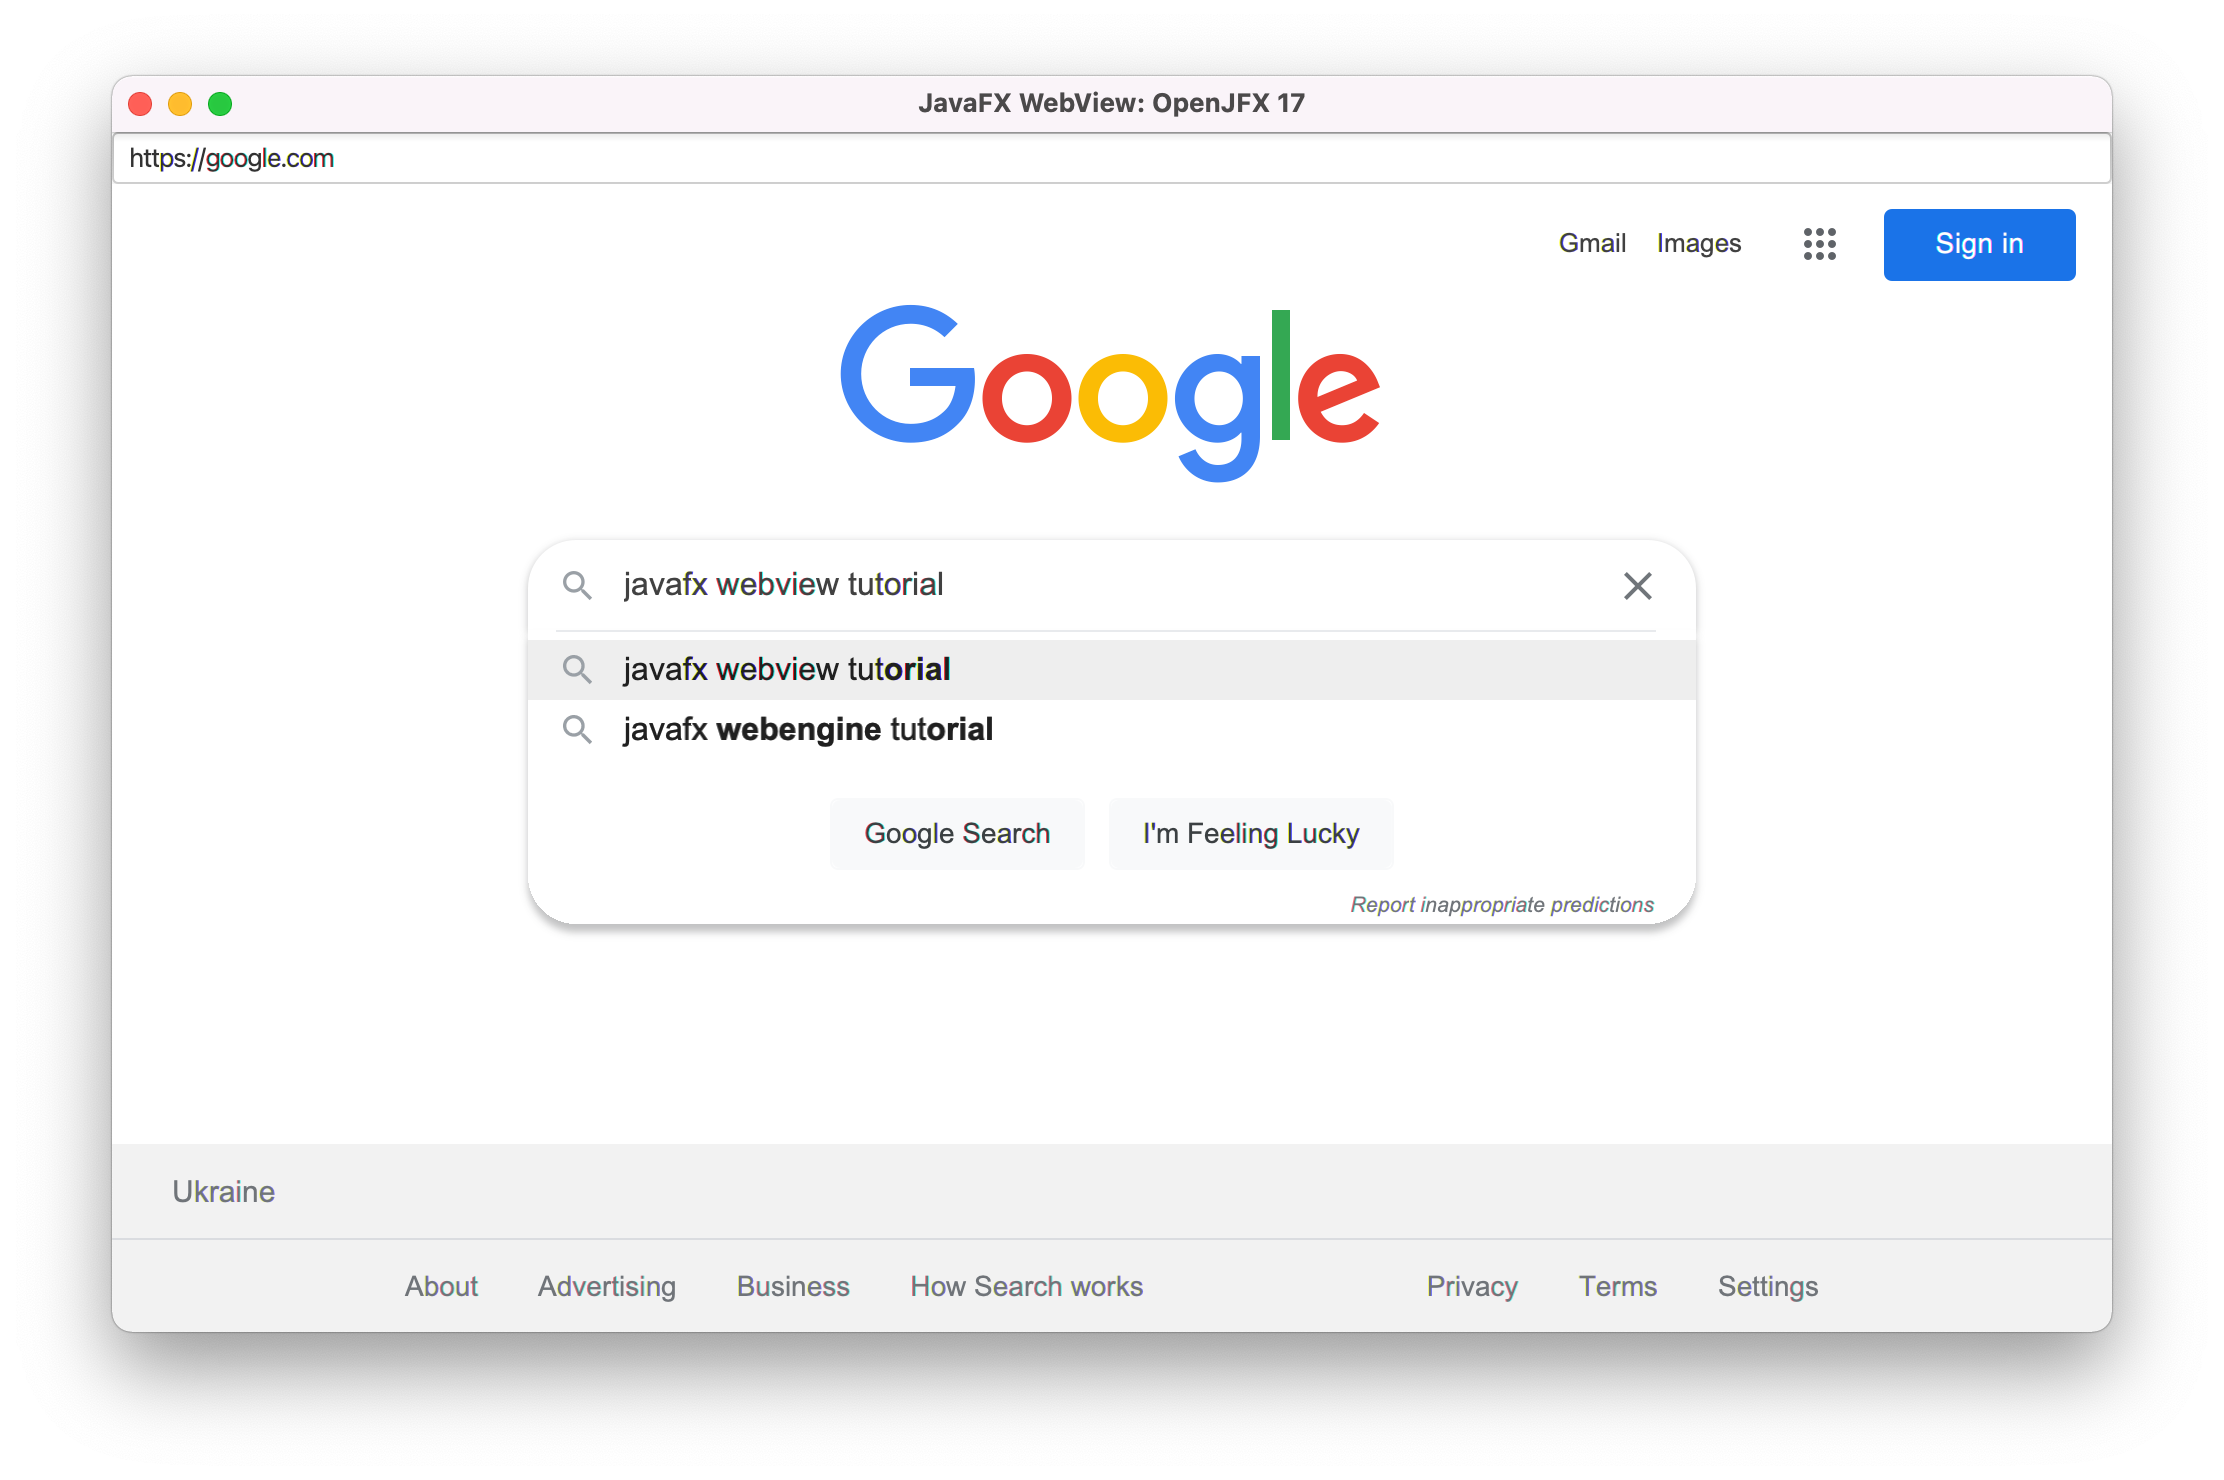 JavaFX WebView 17 Google